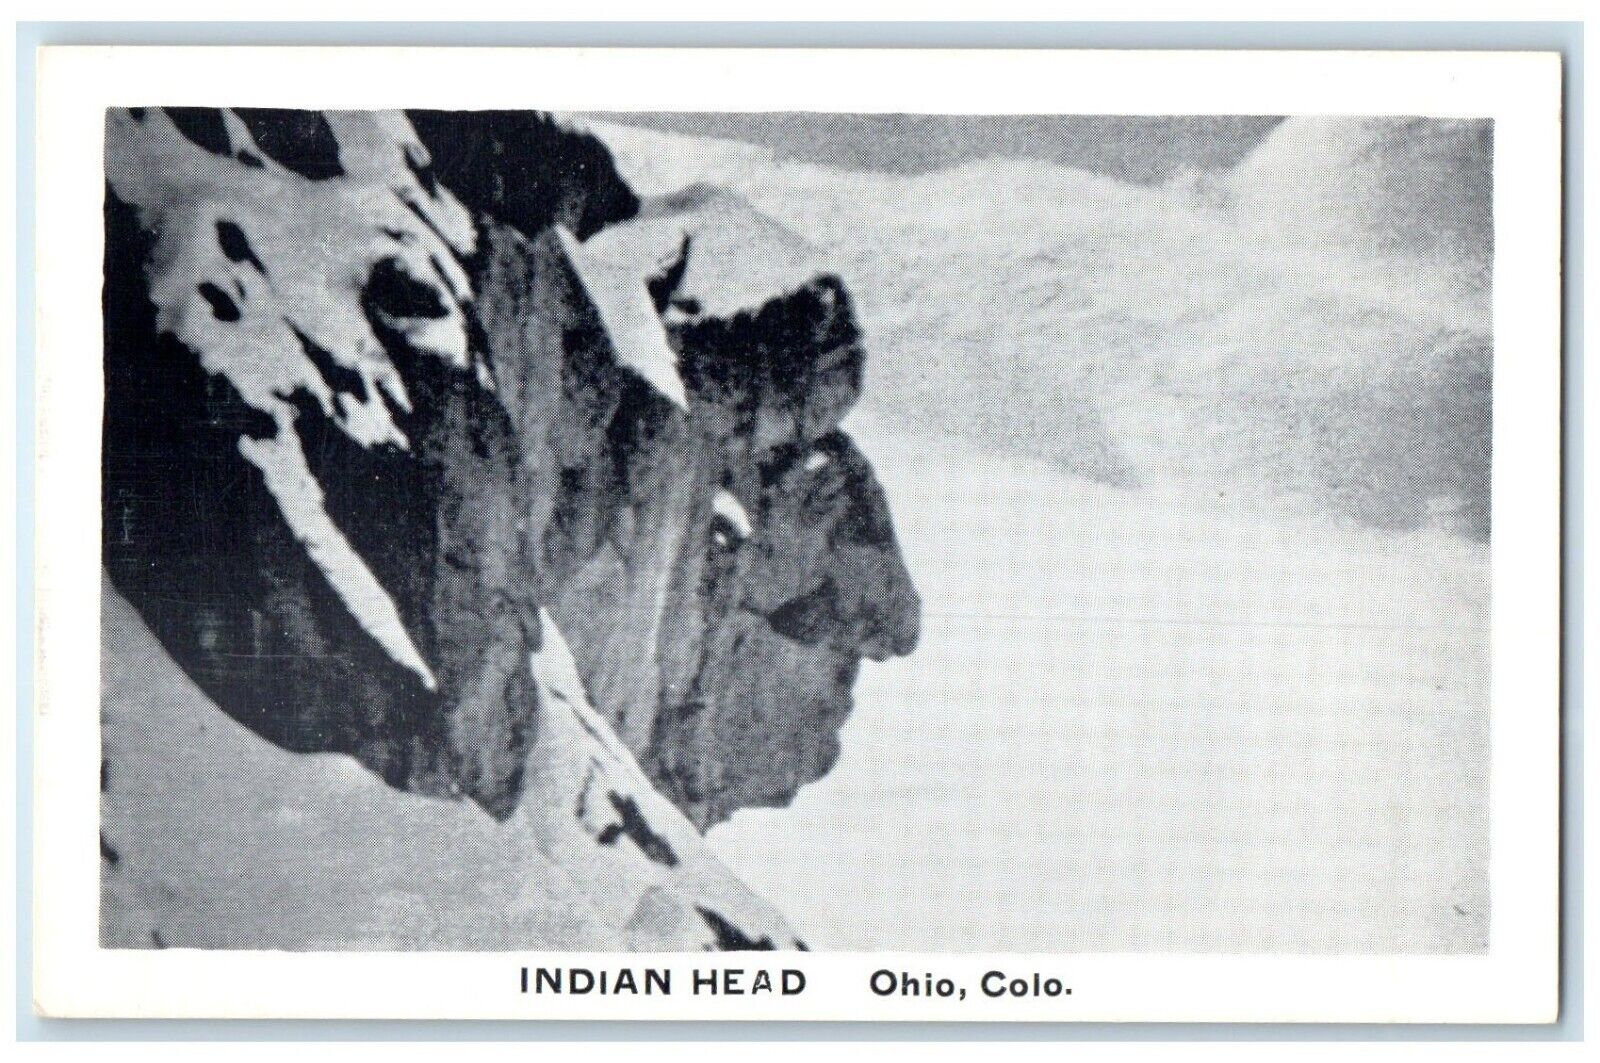 c1940 Birds Eye View Indian Head Rock Formation Ohio Colorado CO Linen Postcard